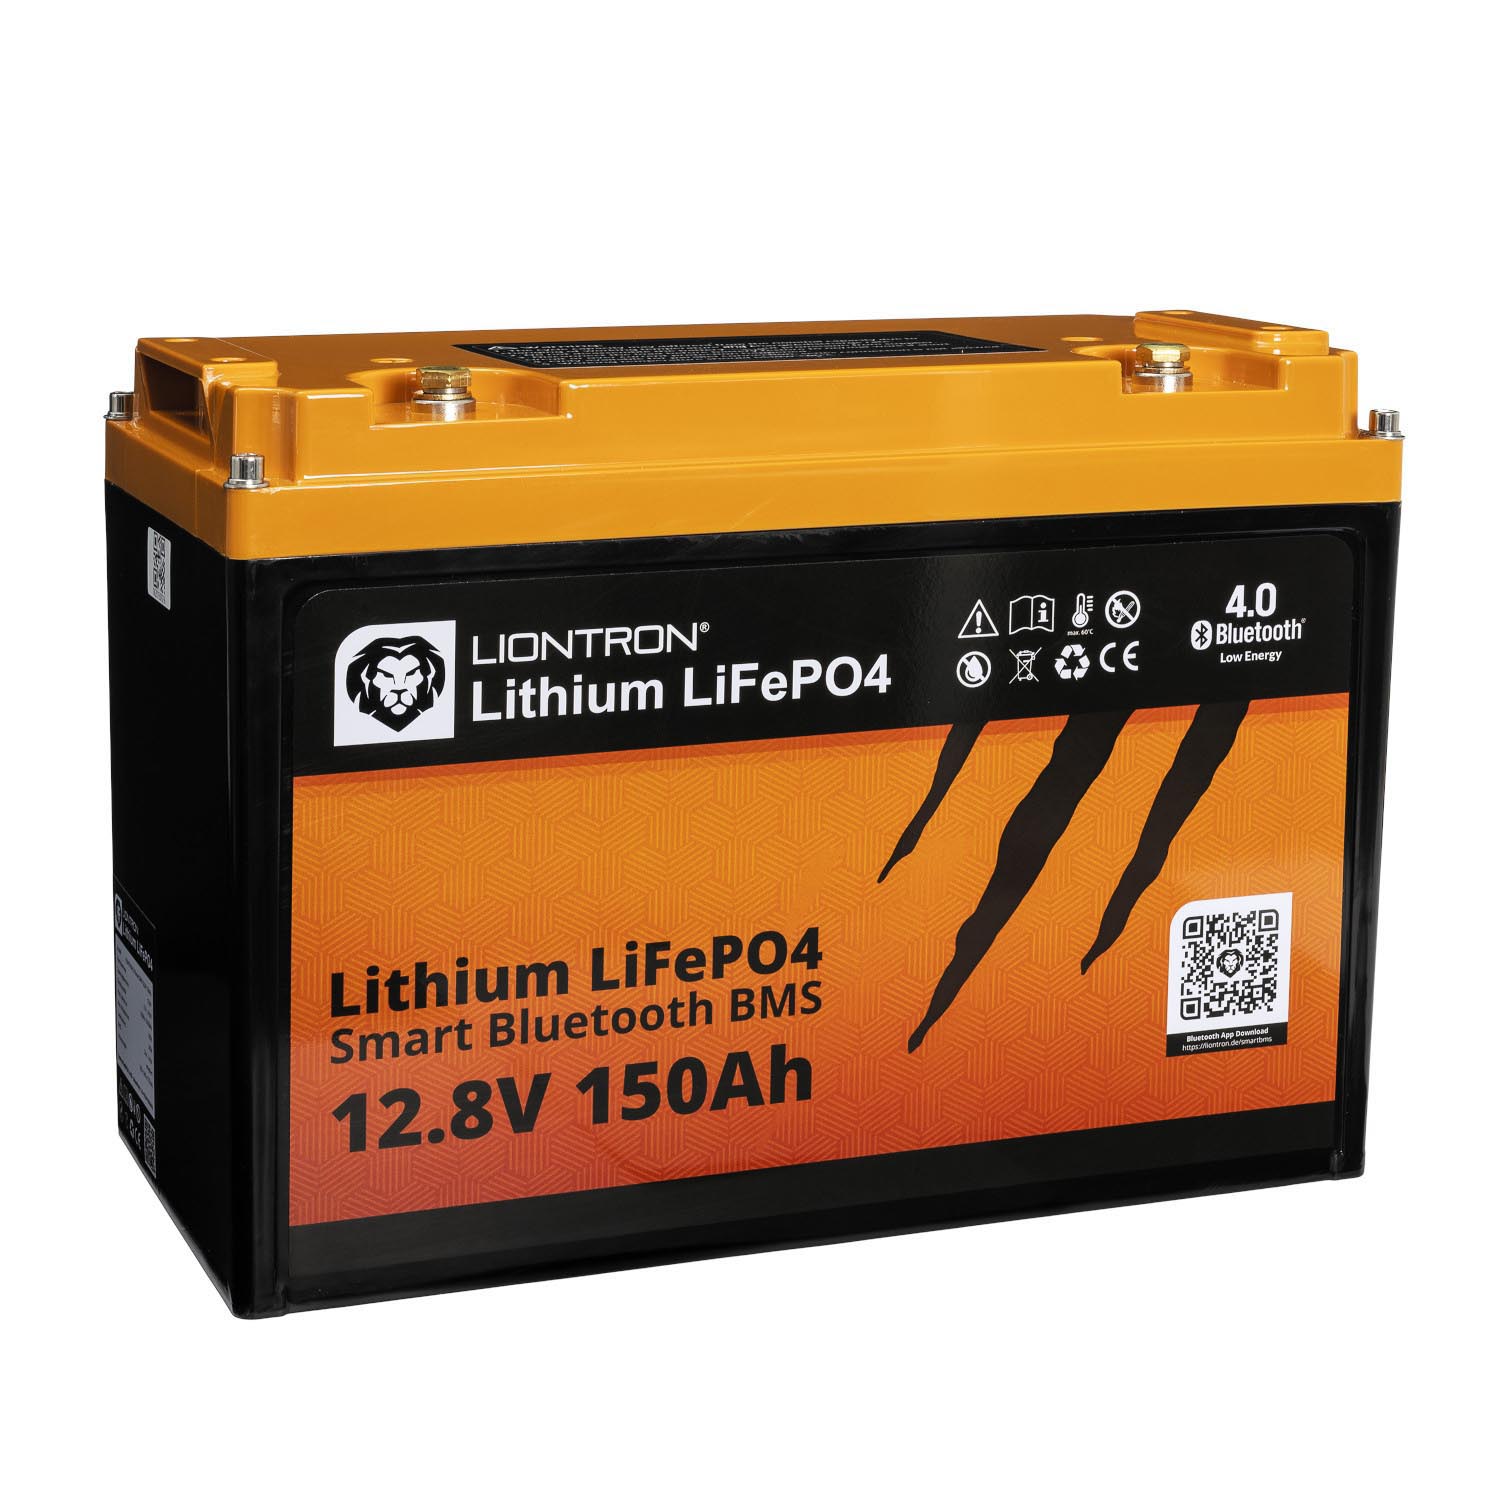 Liontron 150Ah 12V LiFePO4 Lithium Batterie Wohnmobil BMS mit App Arctic (USt-befreit nach §12 Abs.3 Nr. 1 S.1 UStG)